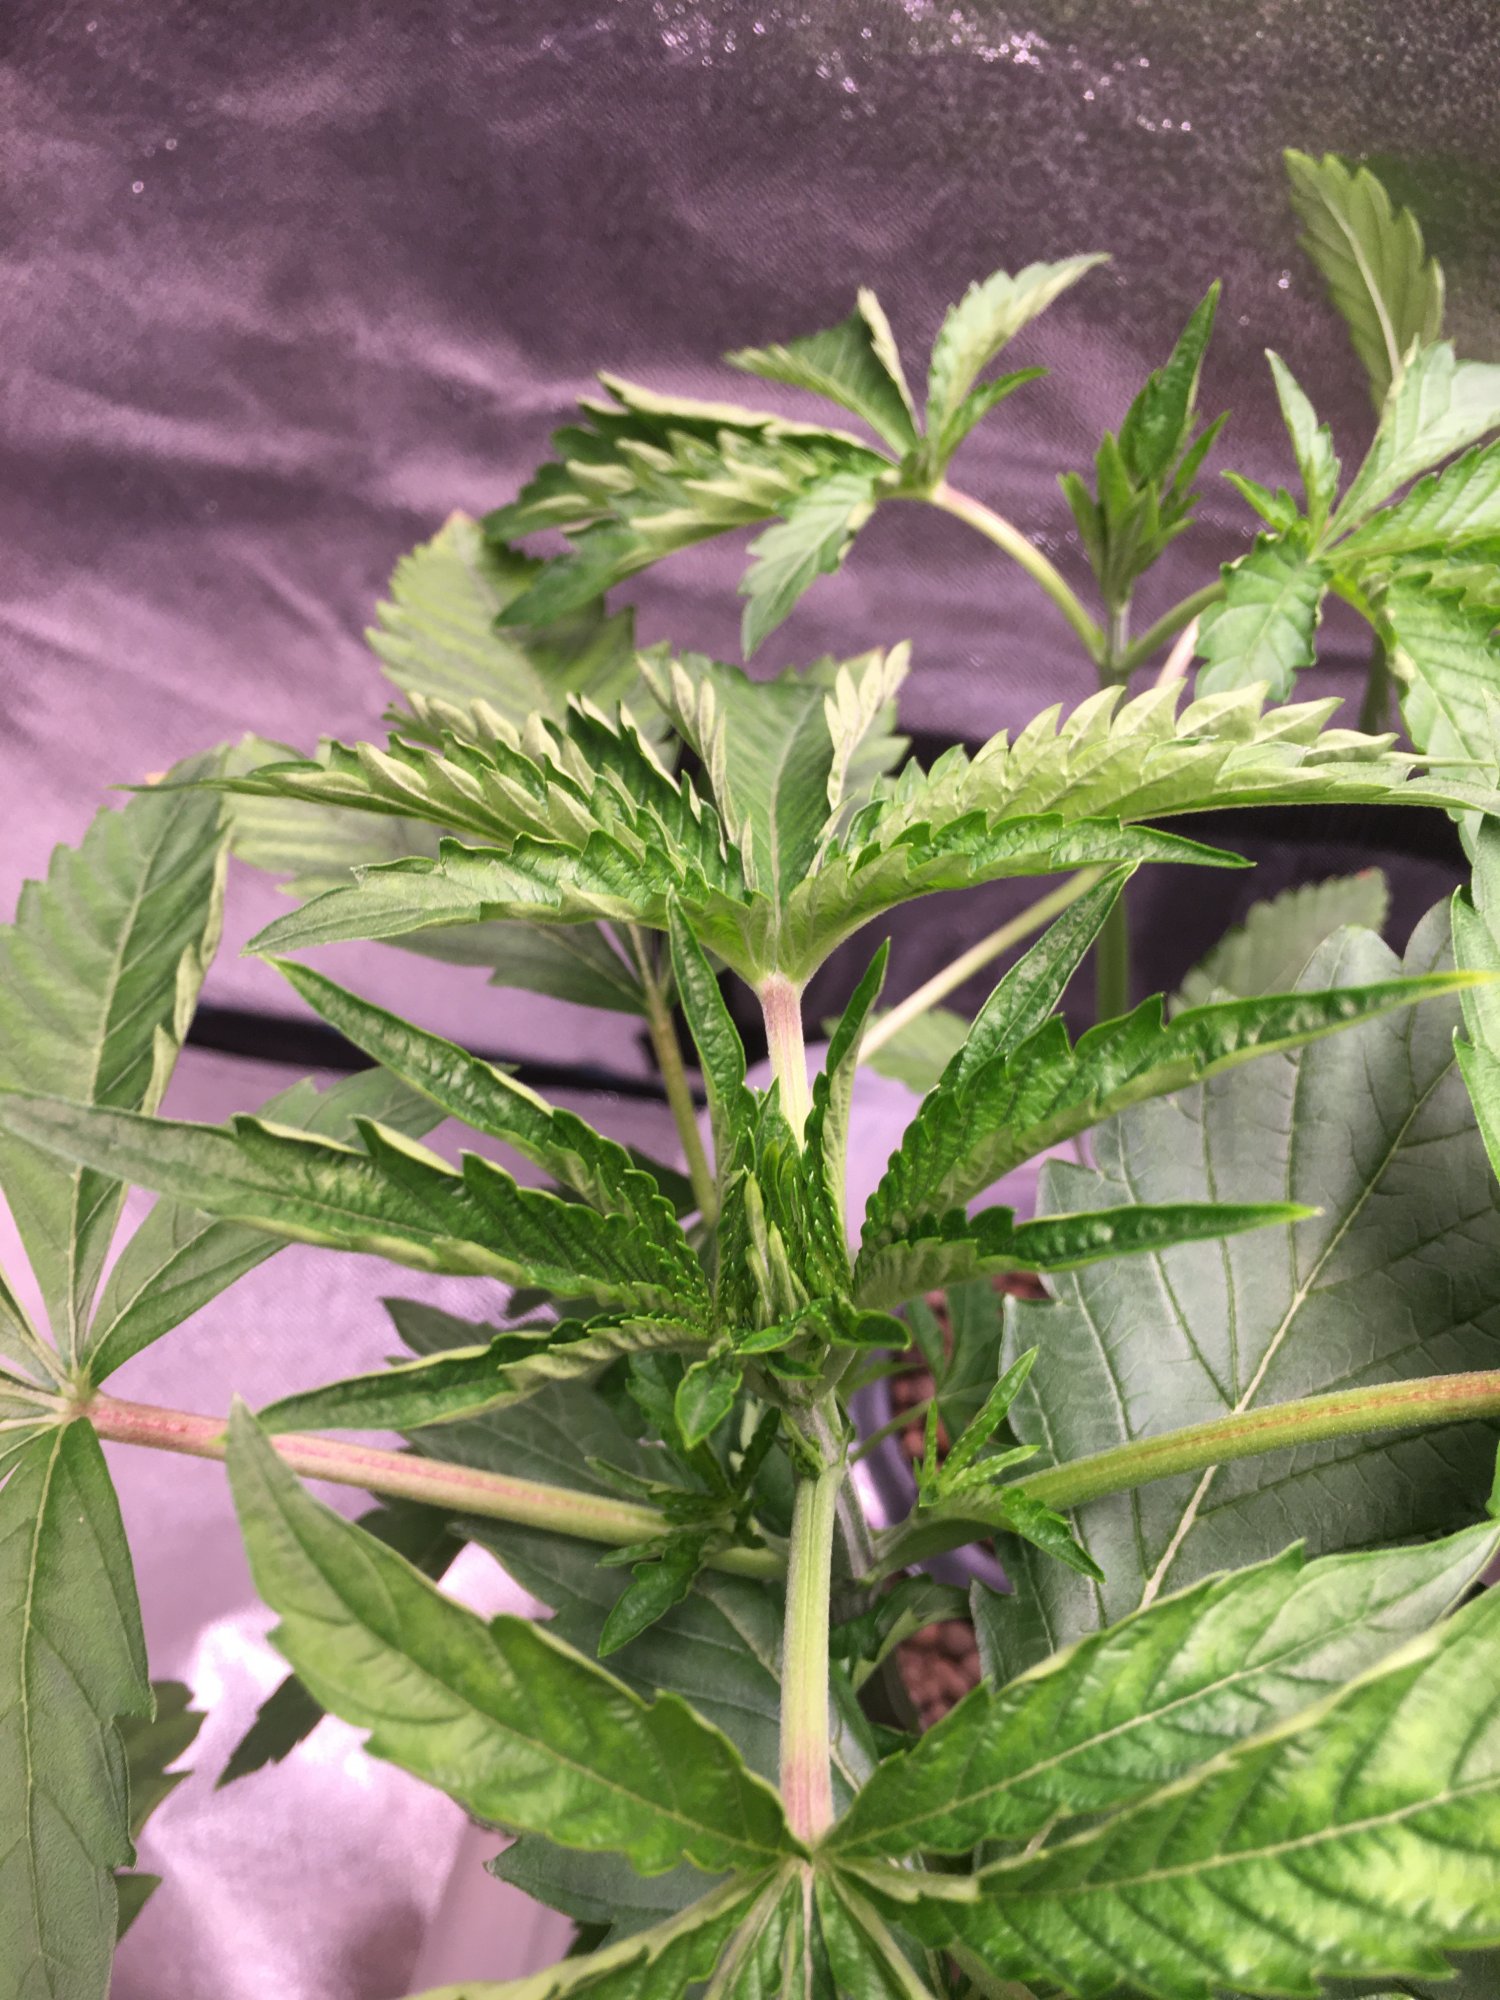 Hydro plant leaf curling issue 2